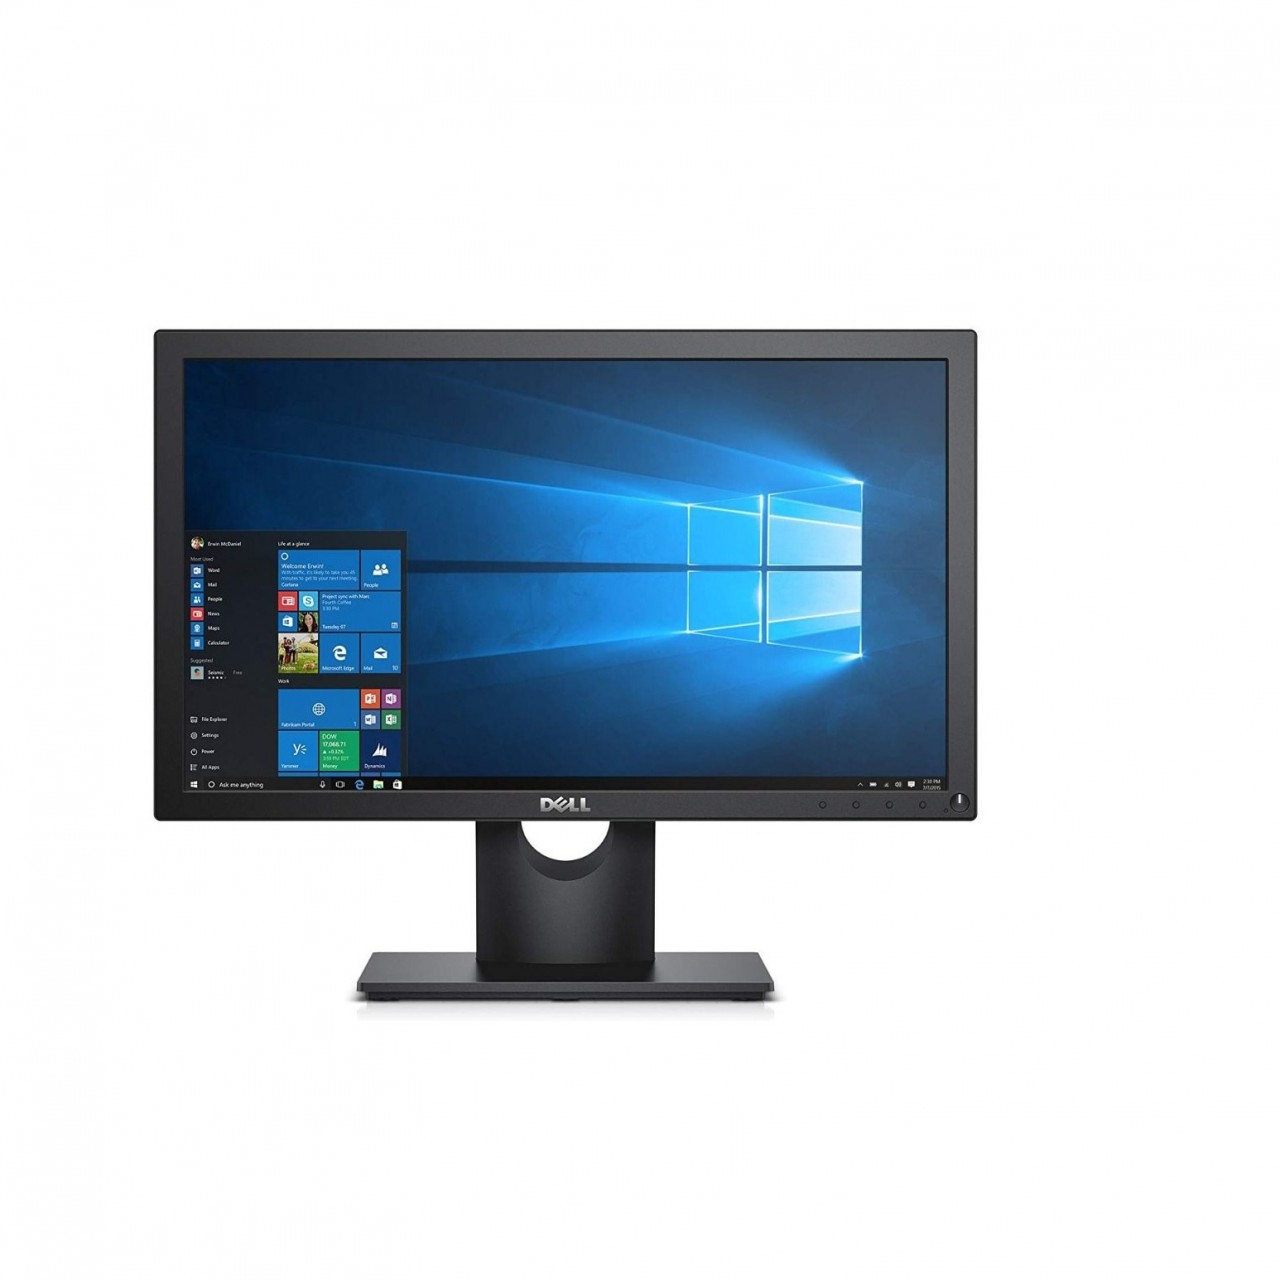 Dell E1916H LED Monitor For Desktop PC - 18.5”